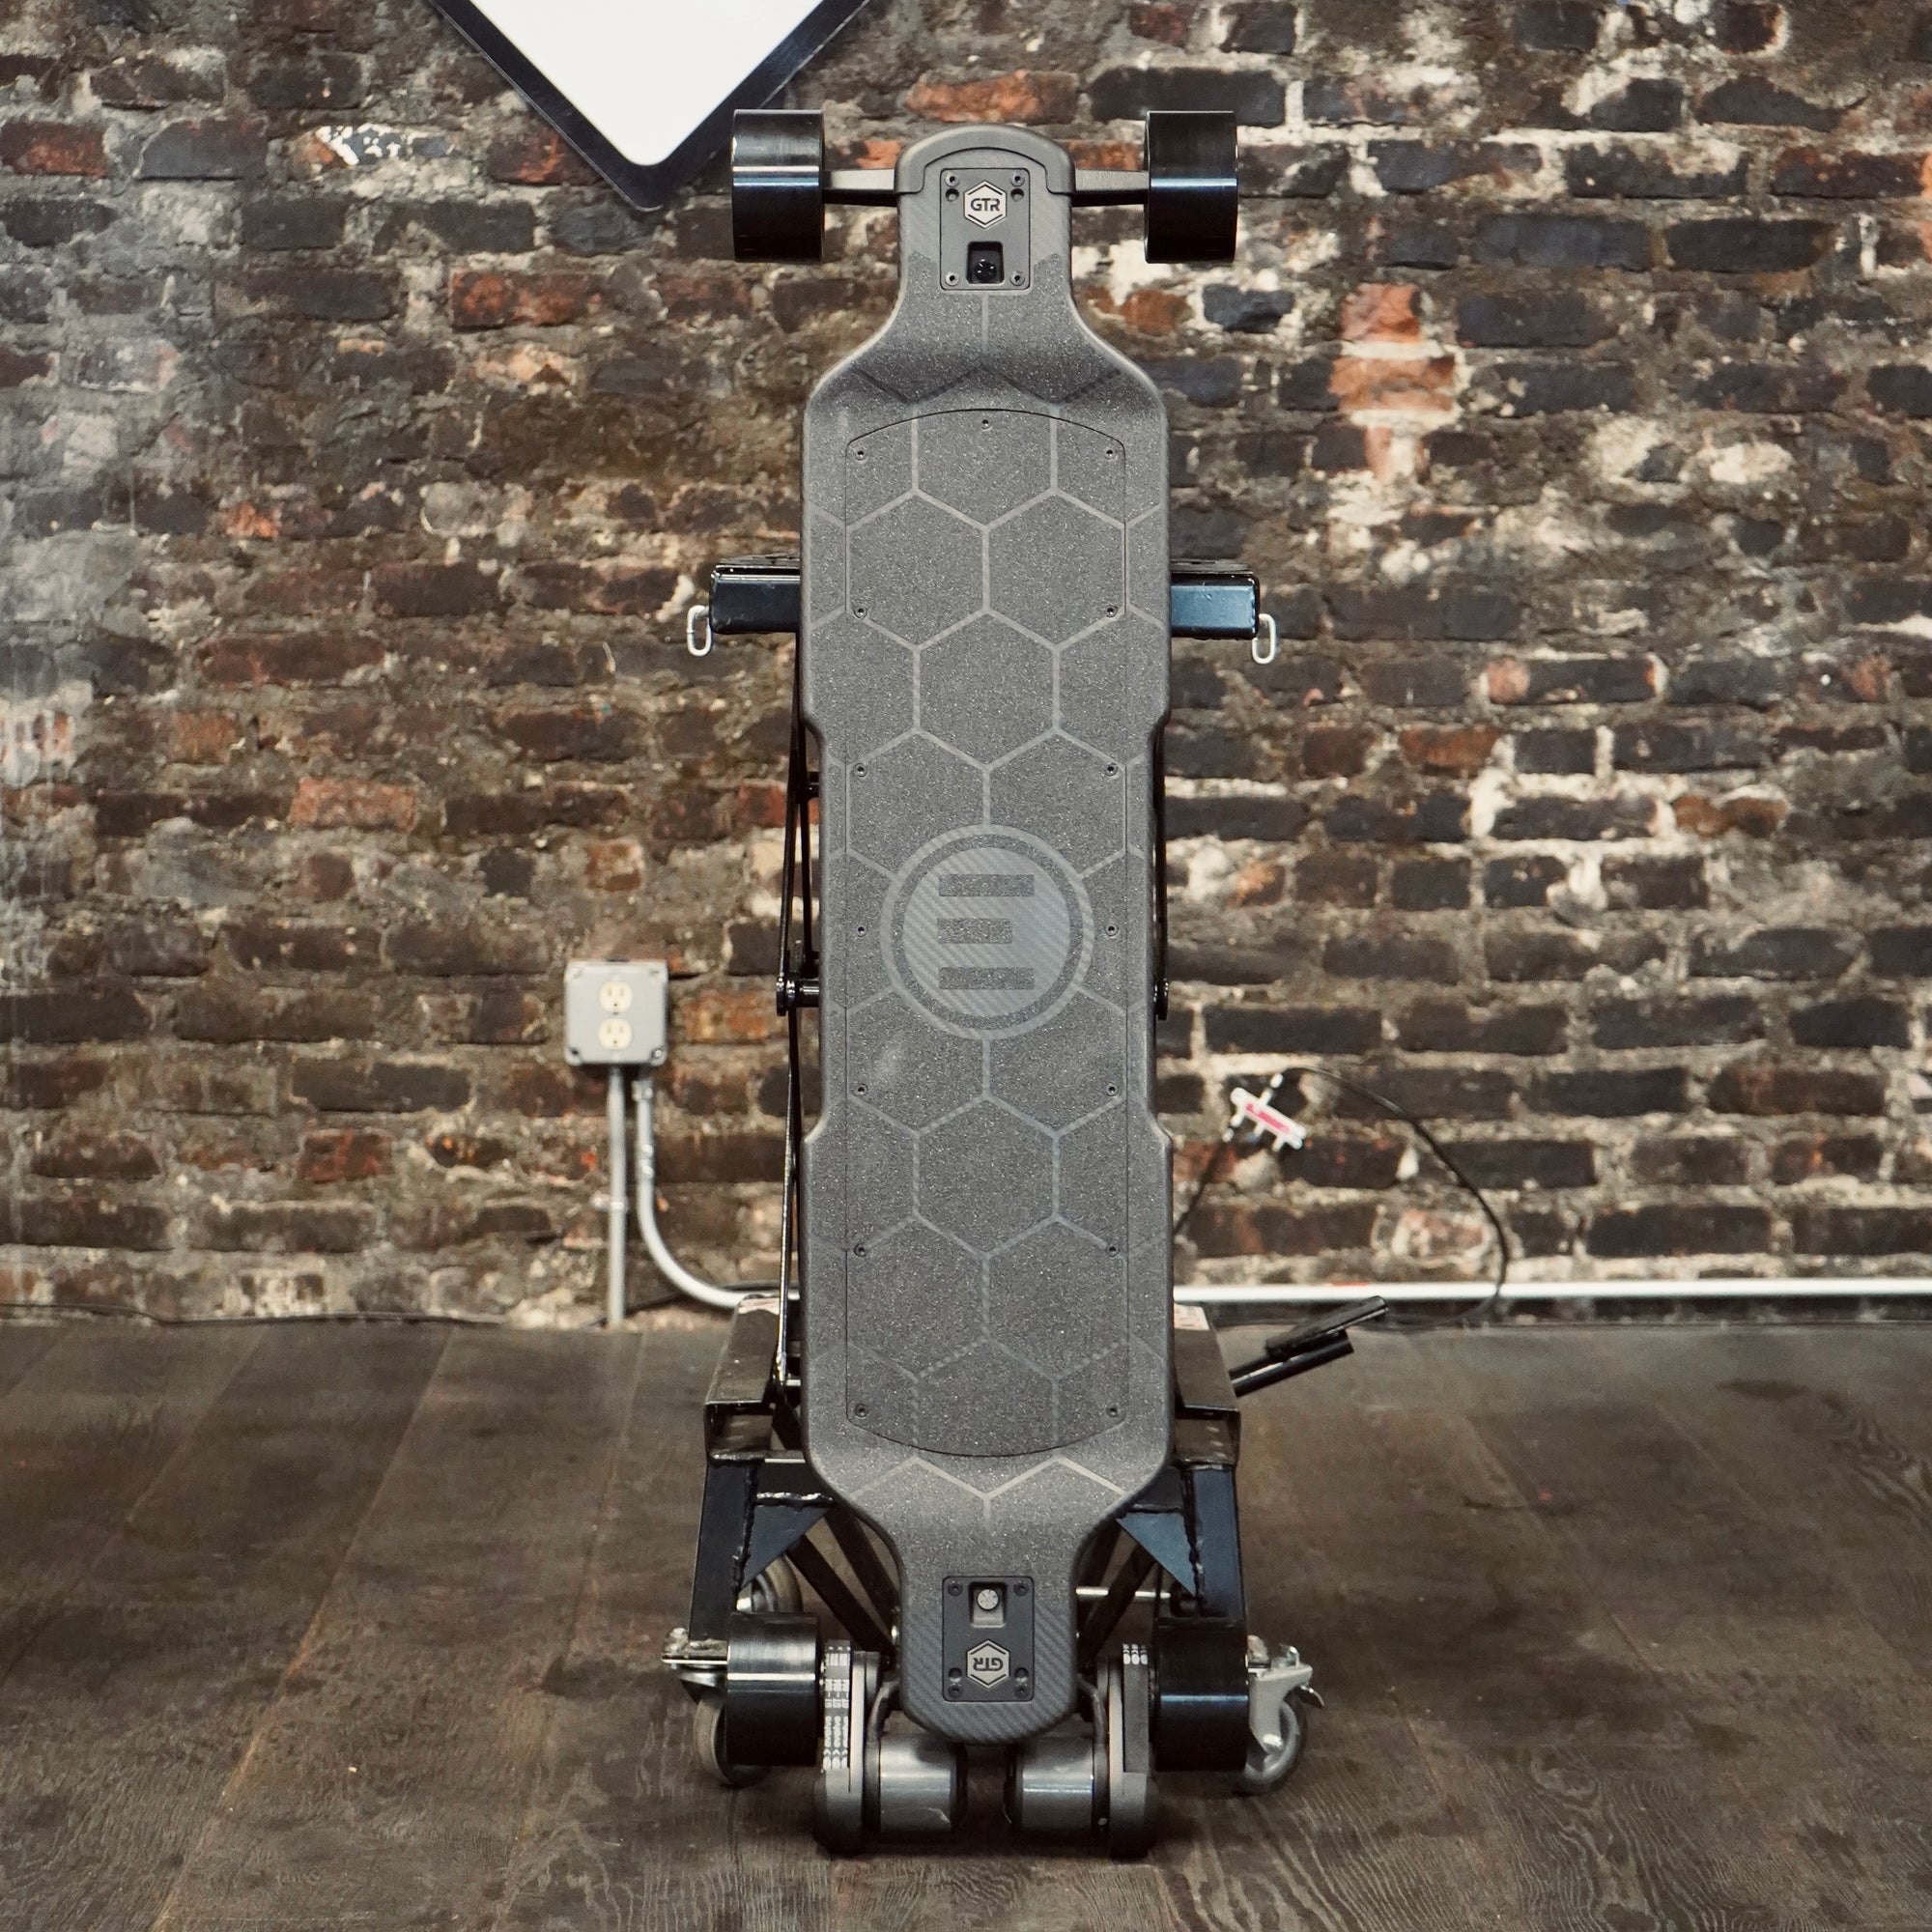 Carbon GTR Series 2 - Evolve Electric Skateboard